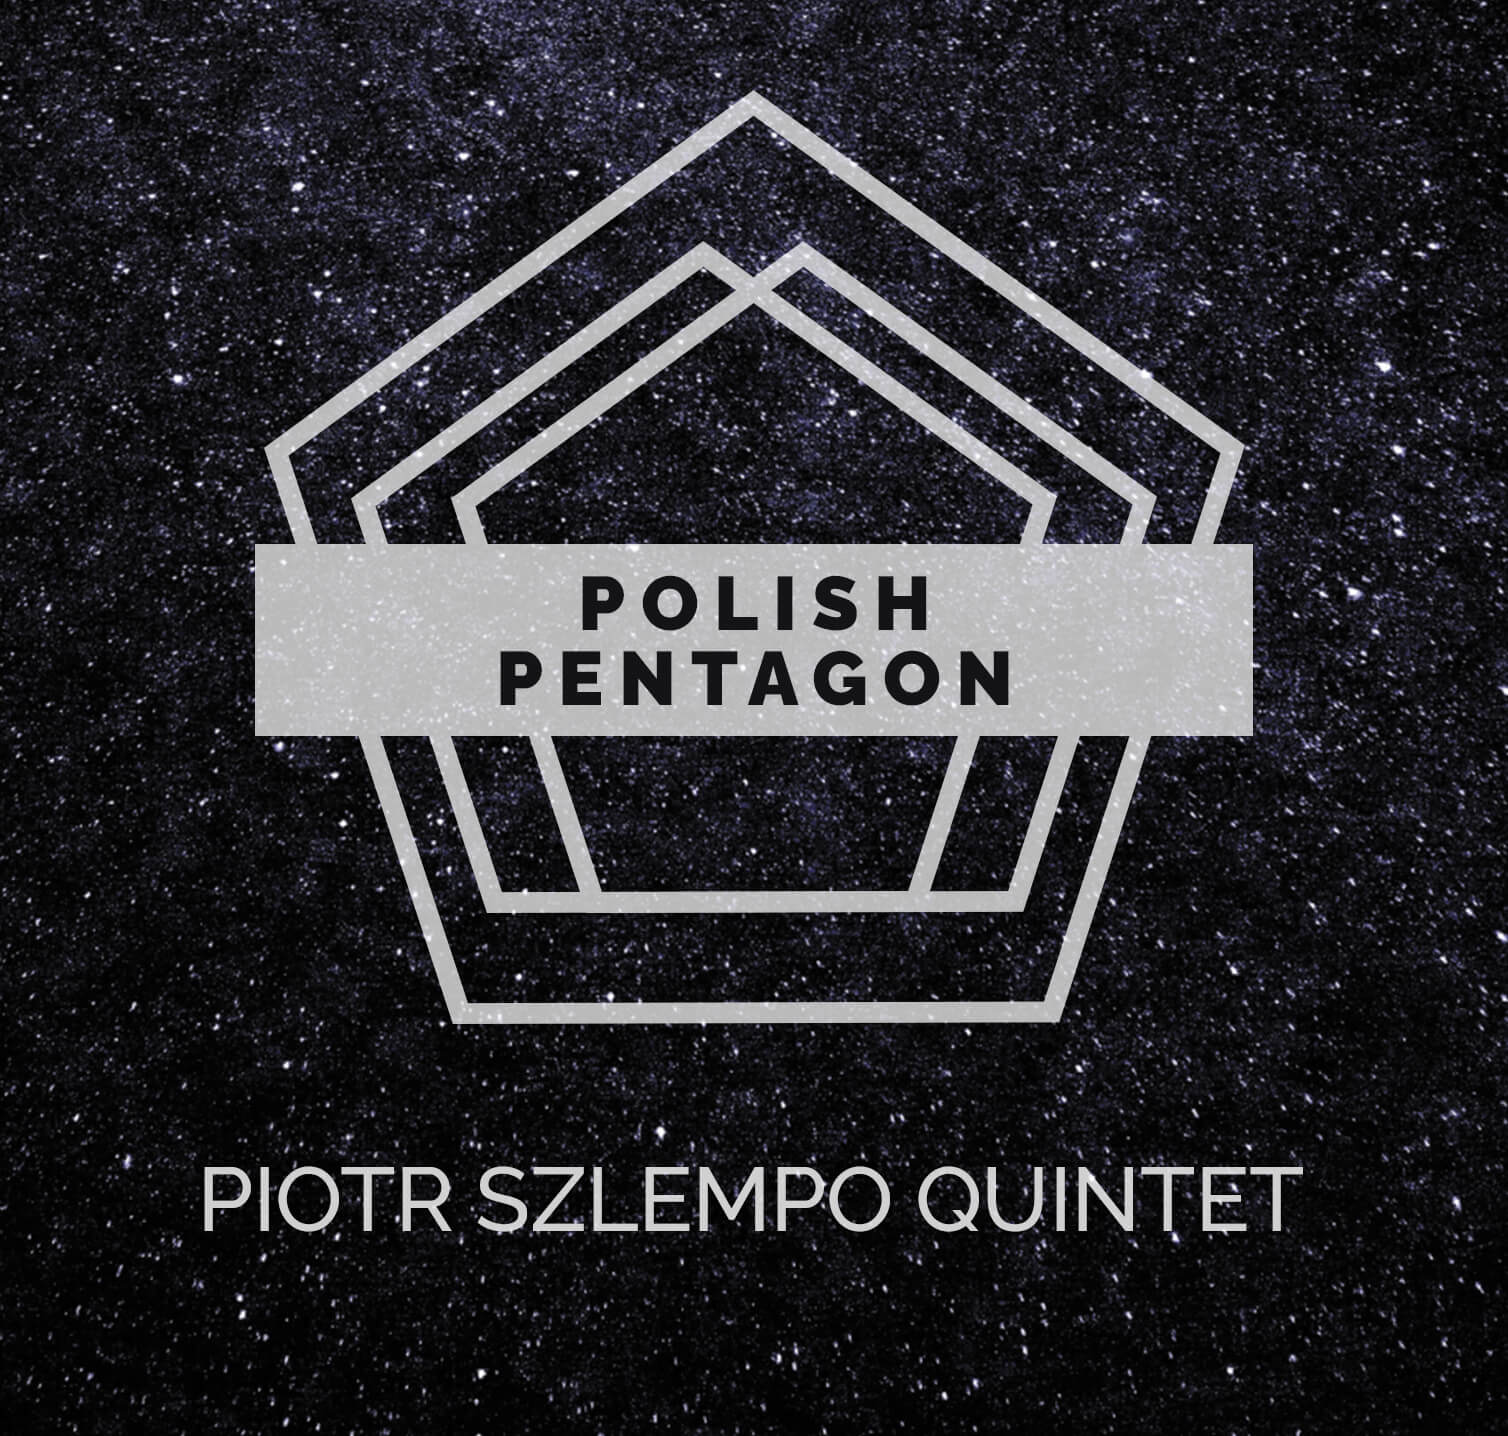 Piotr Szlempo Quintet - Polish Pentagon